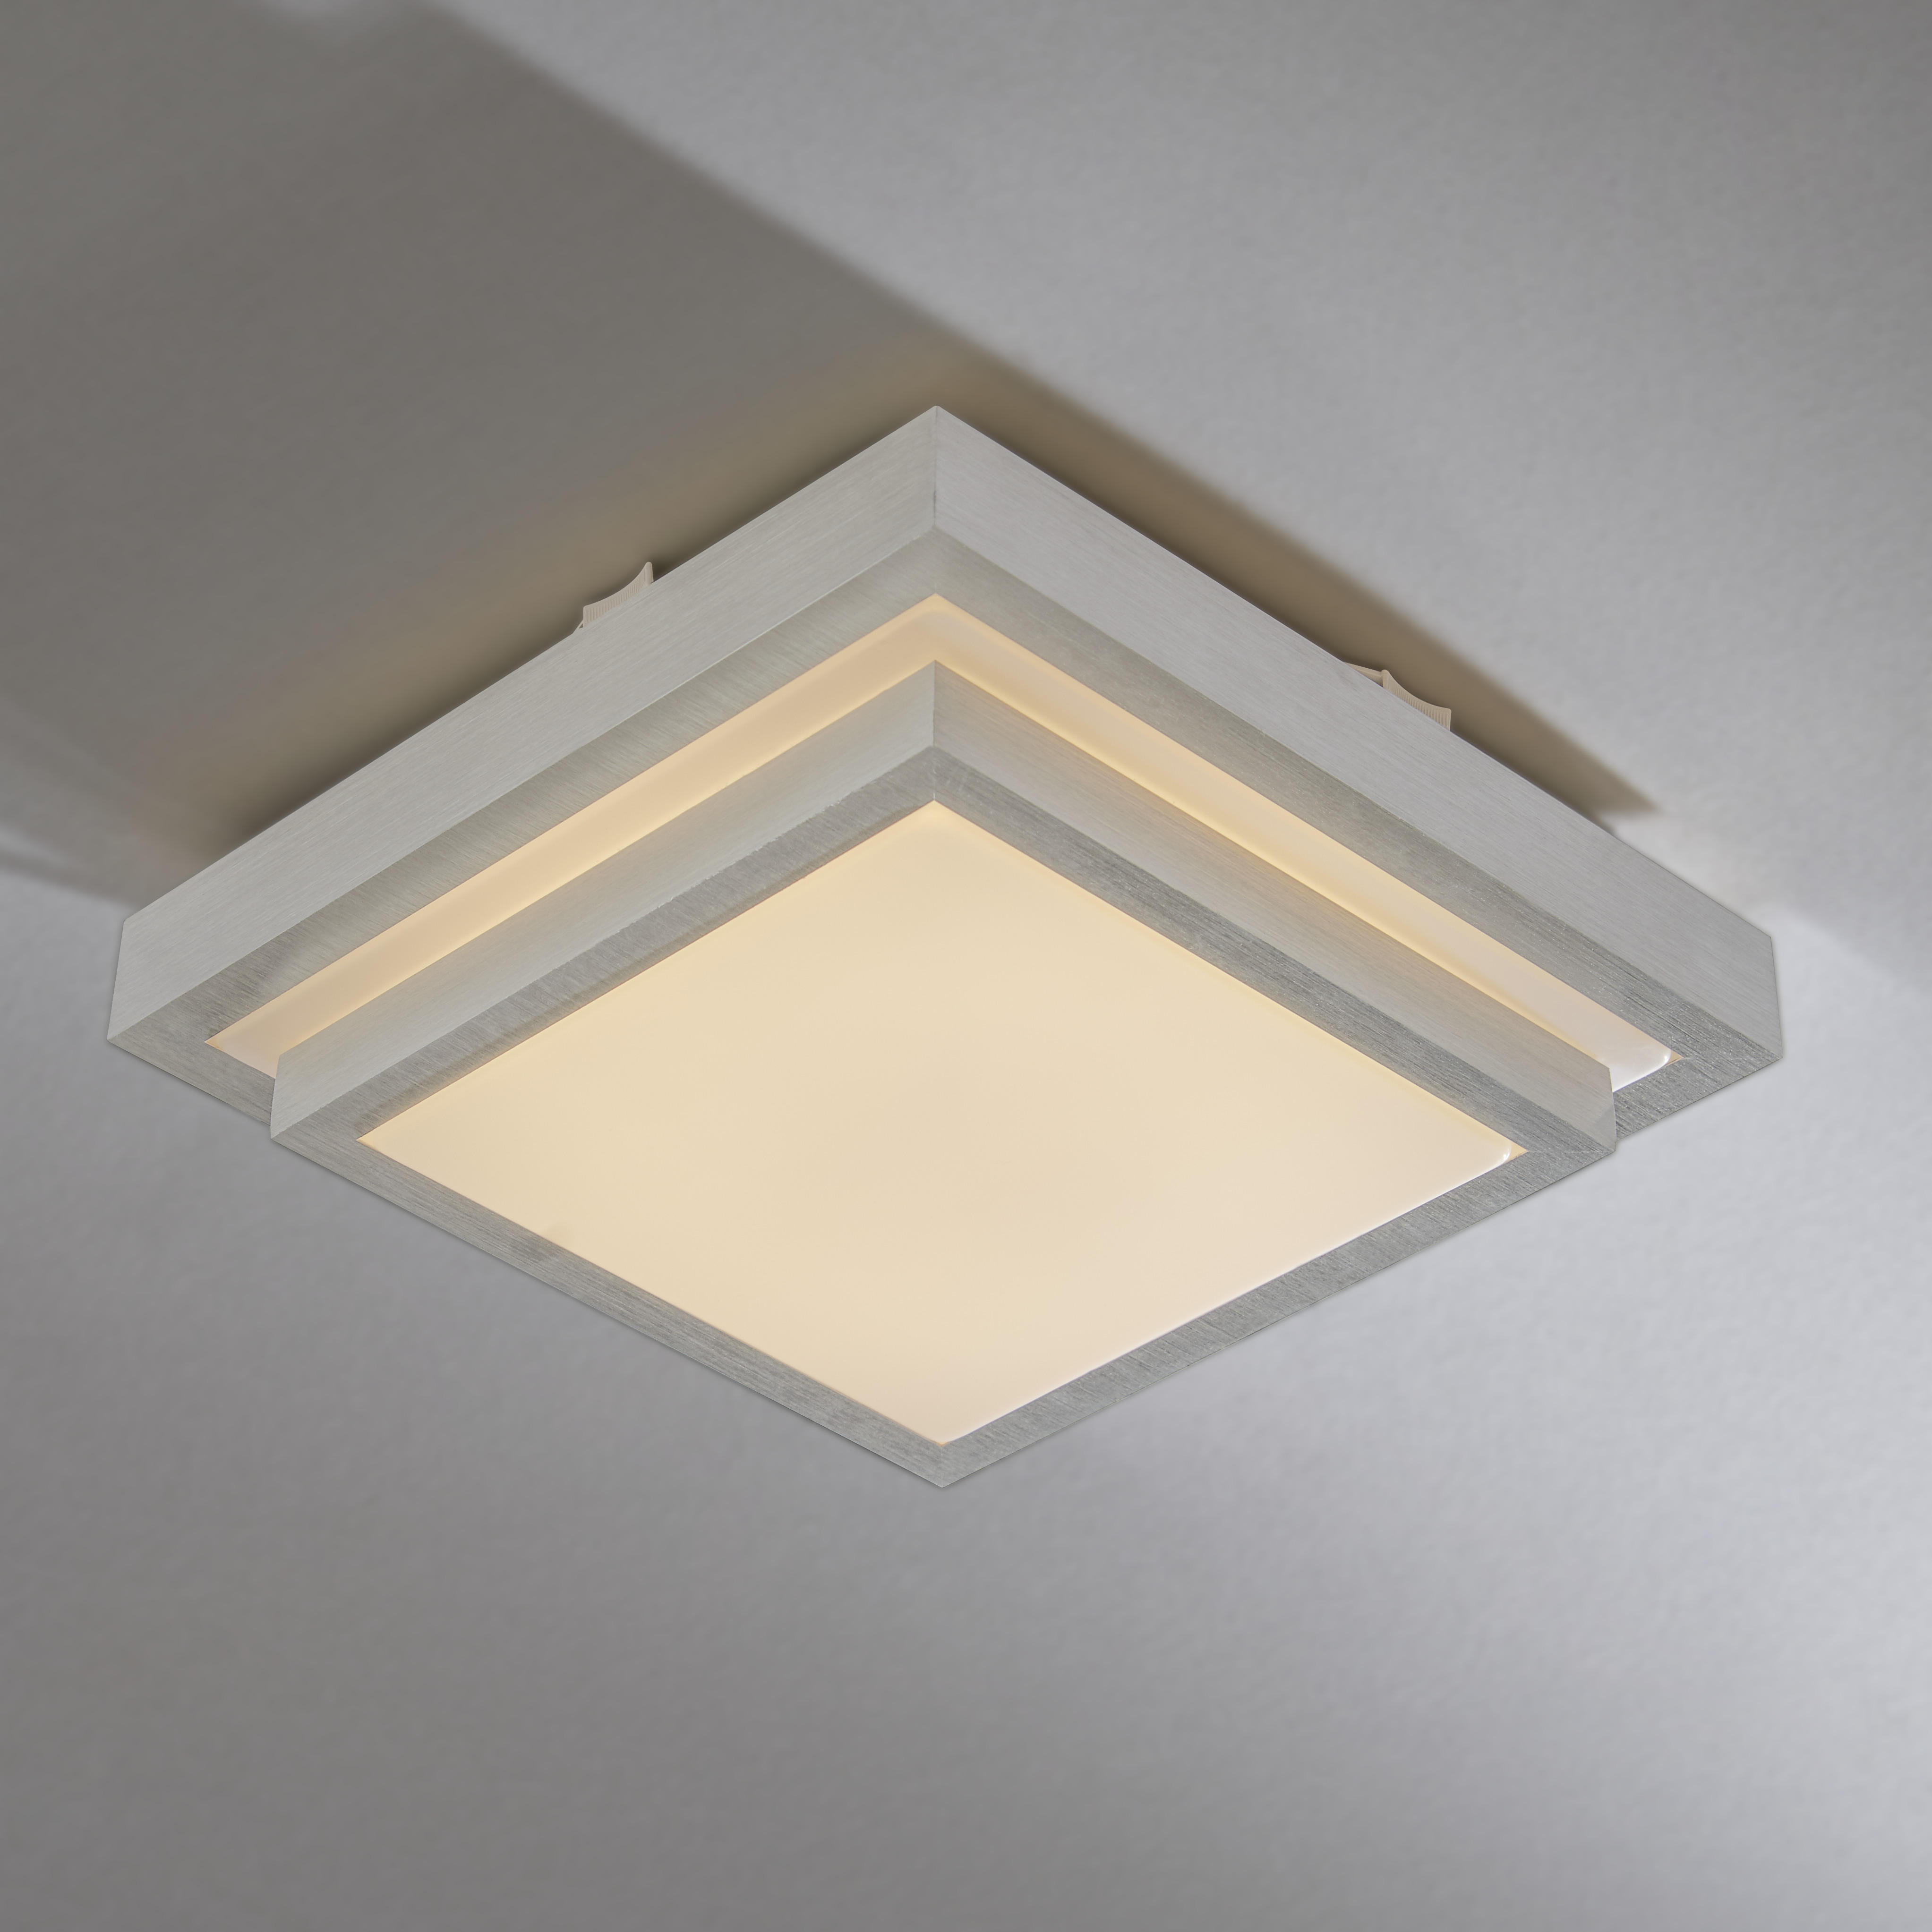 LED-DECKENLEUCHTE 15 W     - Alufarben/Weiß, Basics, Kunststoff/Metall (30/30cm) - Novel